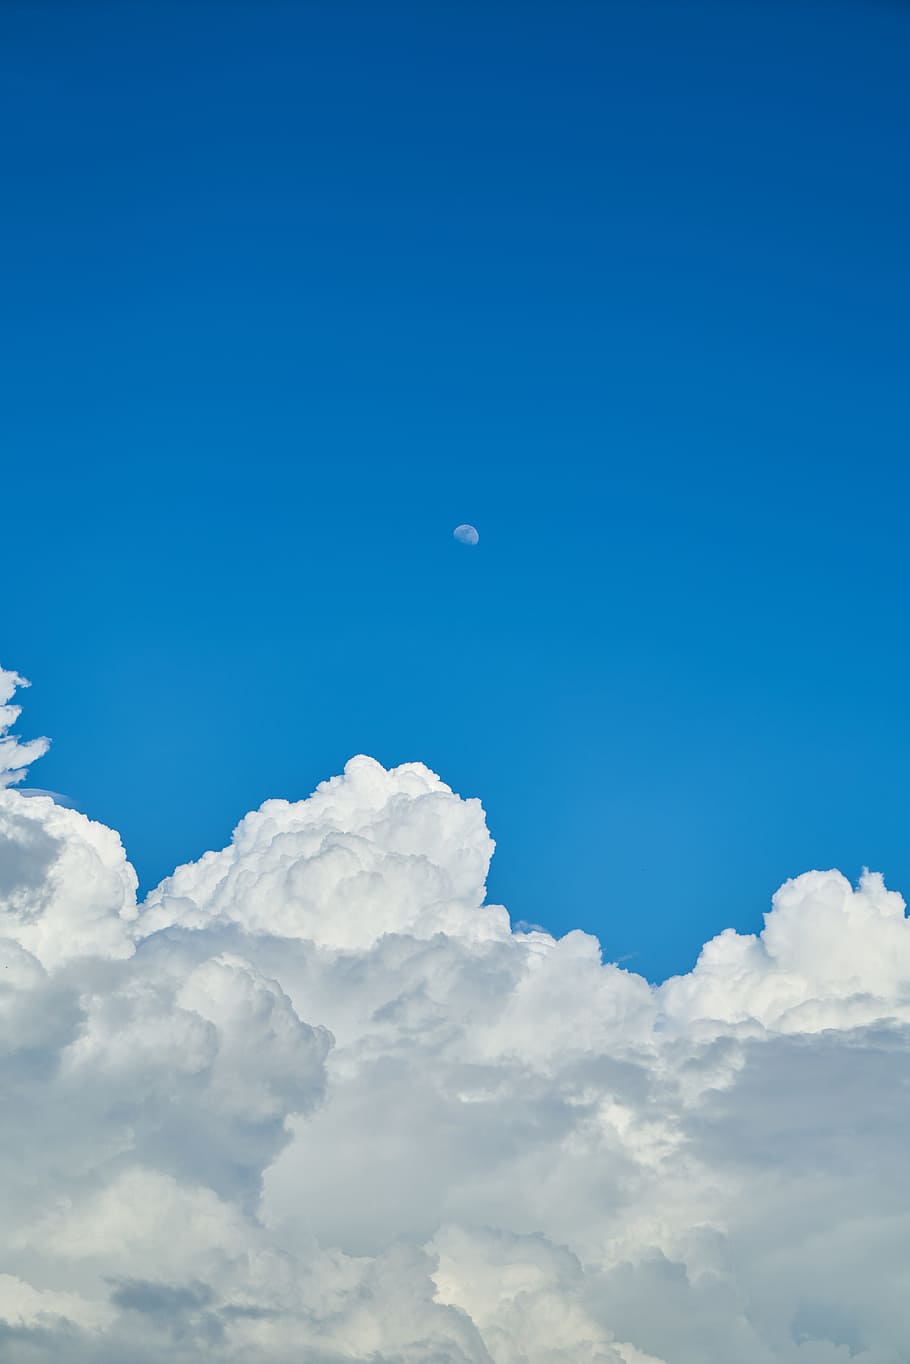 HD wallpaper: white clouds under blud sky, blue, landscape, nature, summer  | Wallpaper Flare